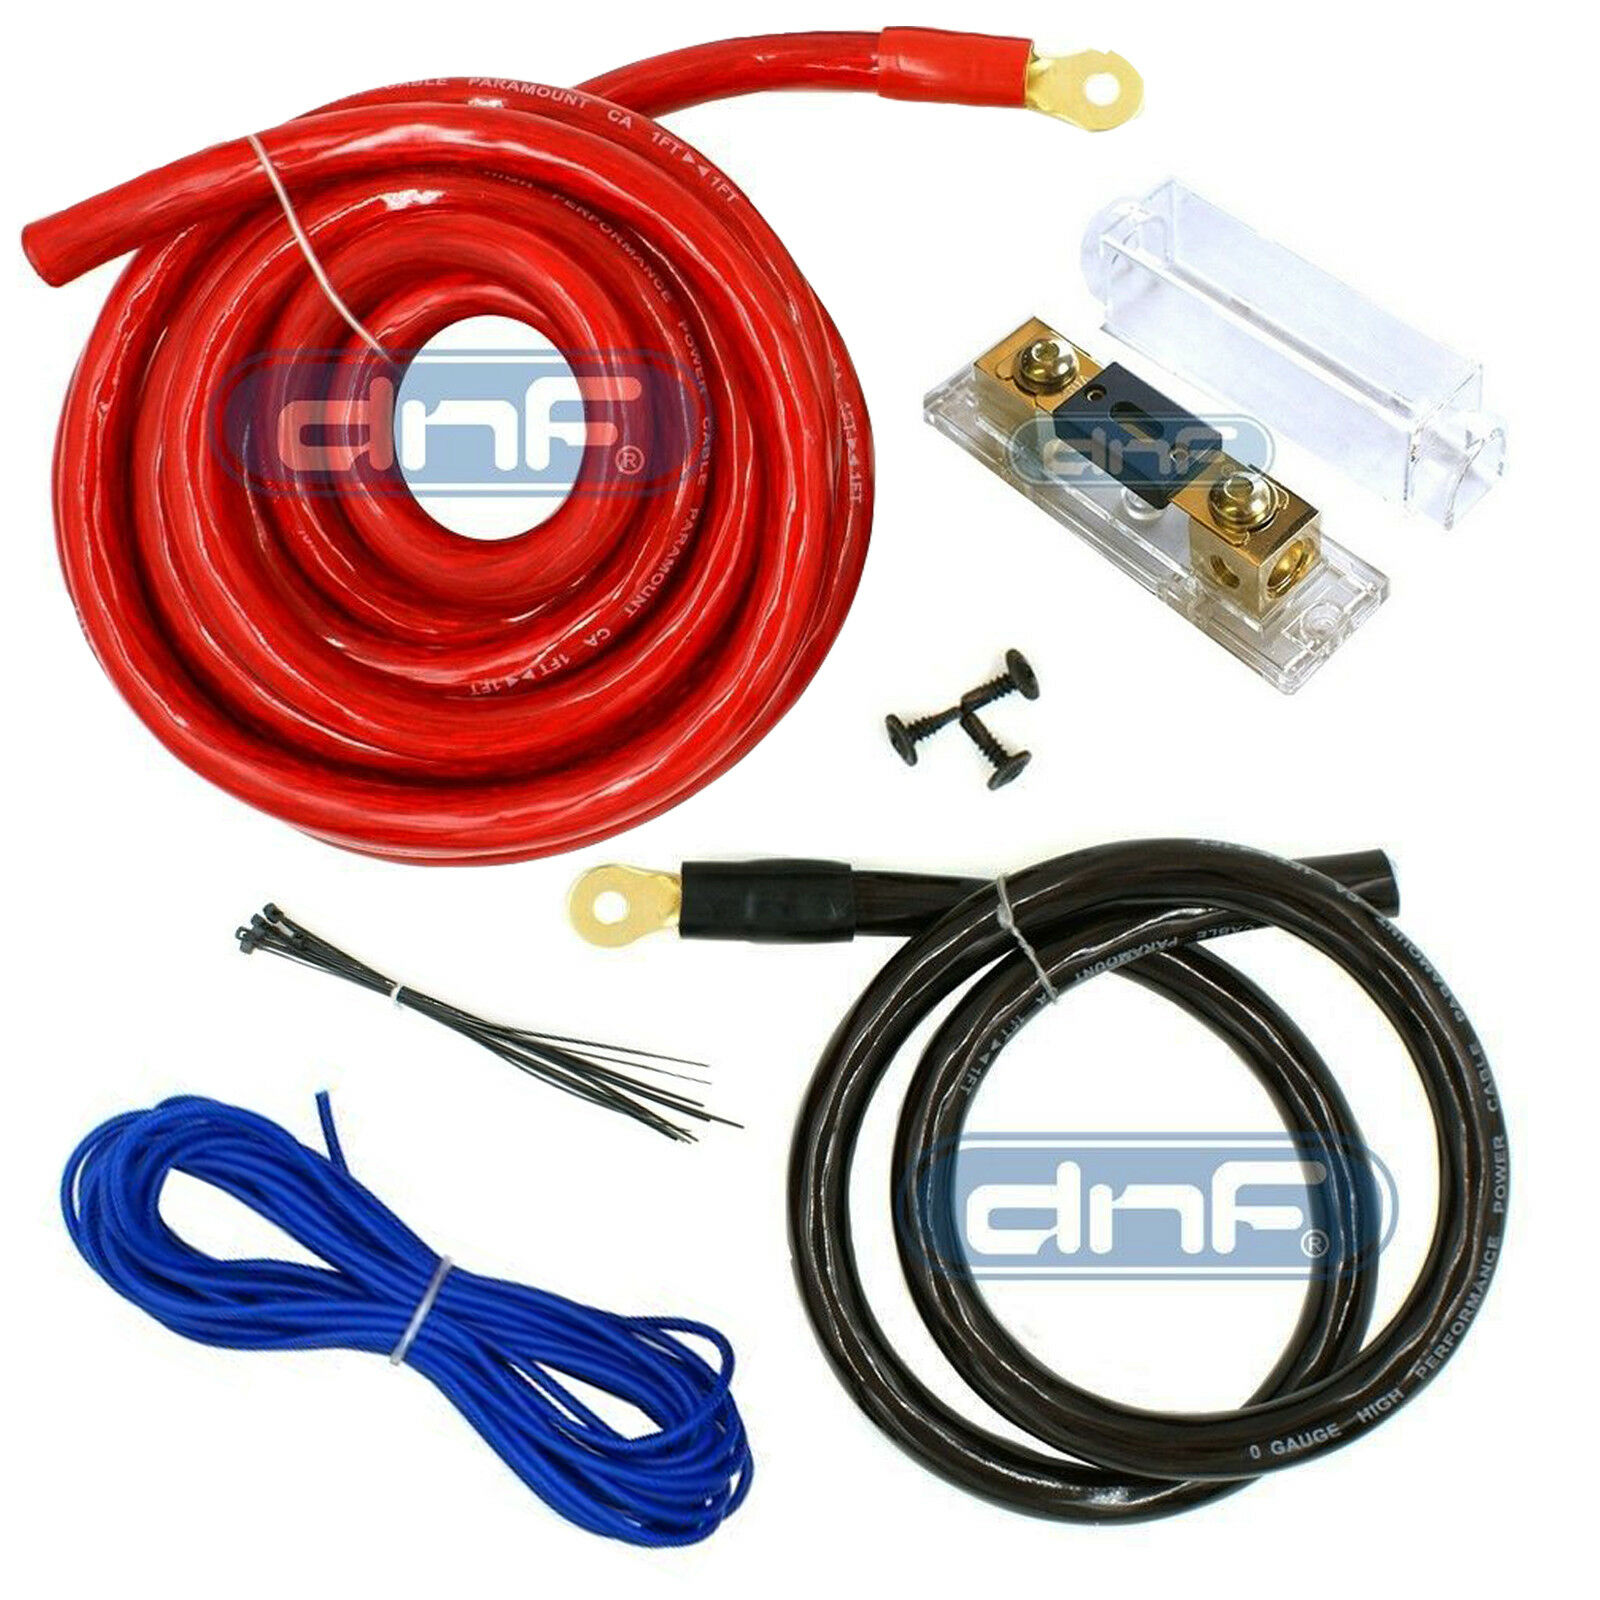 0 Gauge Amp Kit Amplifier Complete Install Wiring Kit Power 0 Ga Wire 6000w